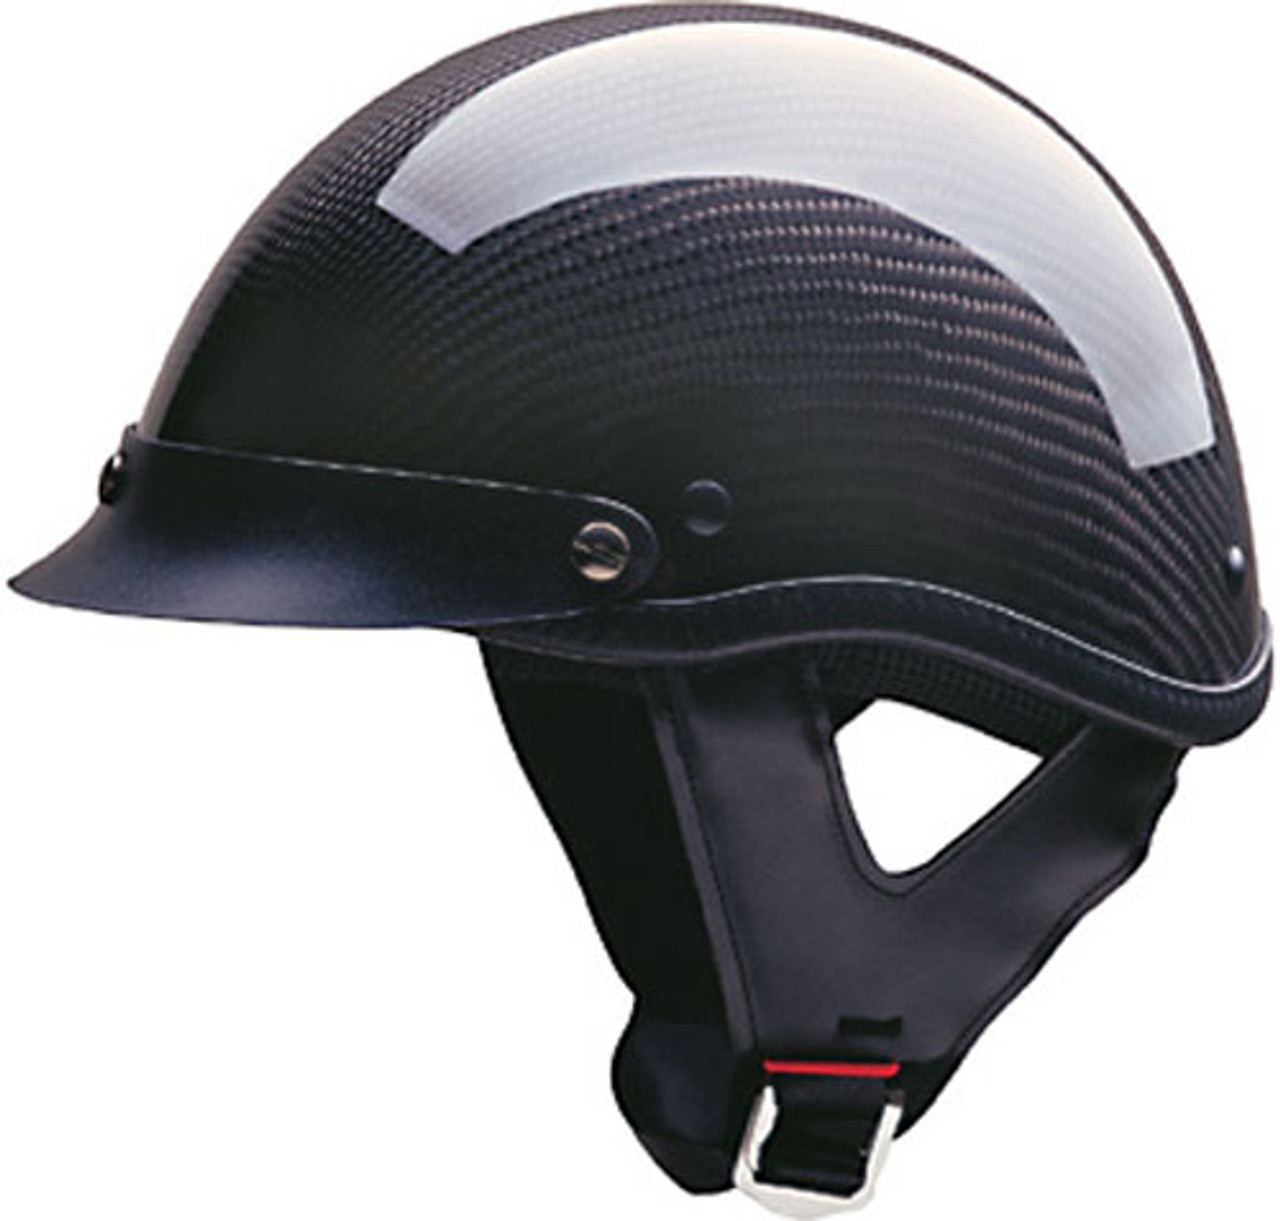 DOT Carbon Fiber Motorcycle Half Helmet with Visor